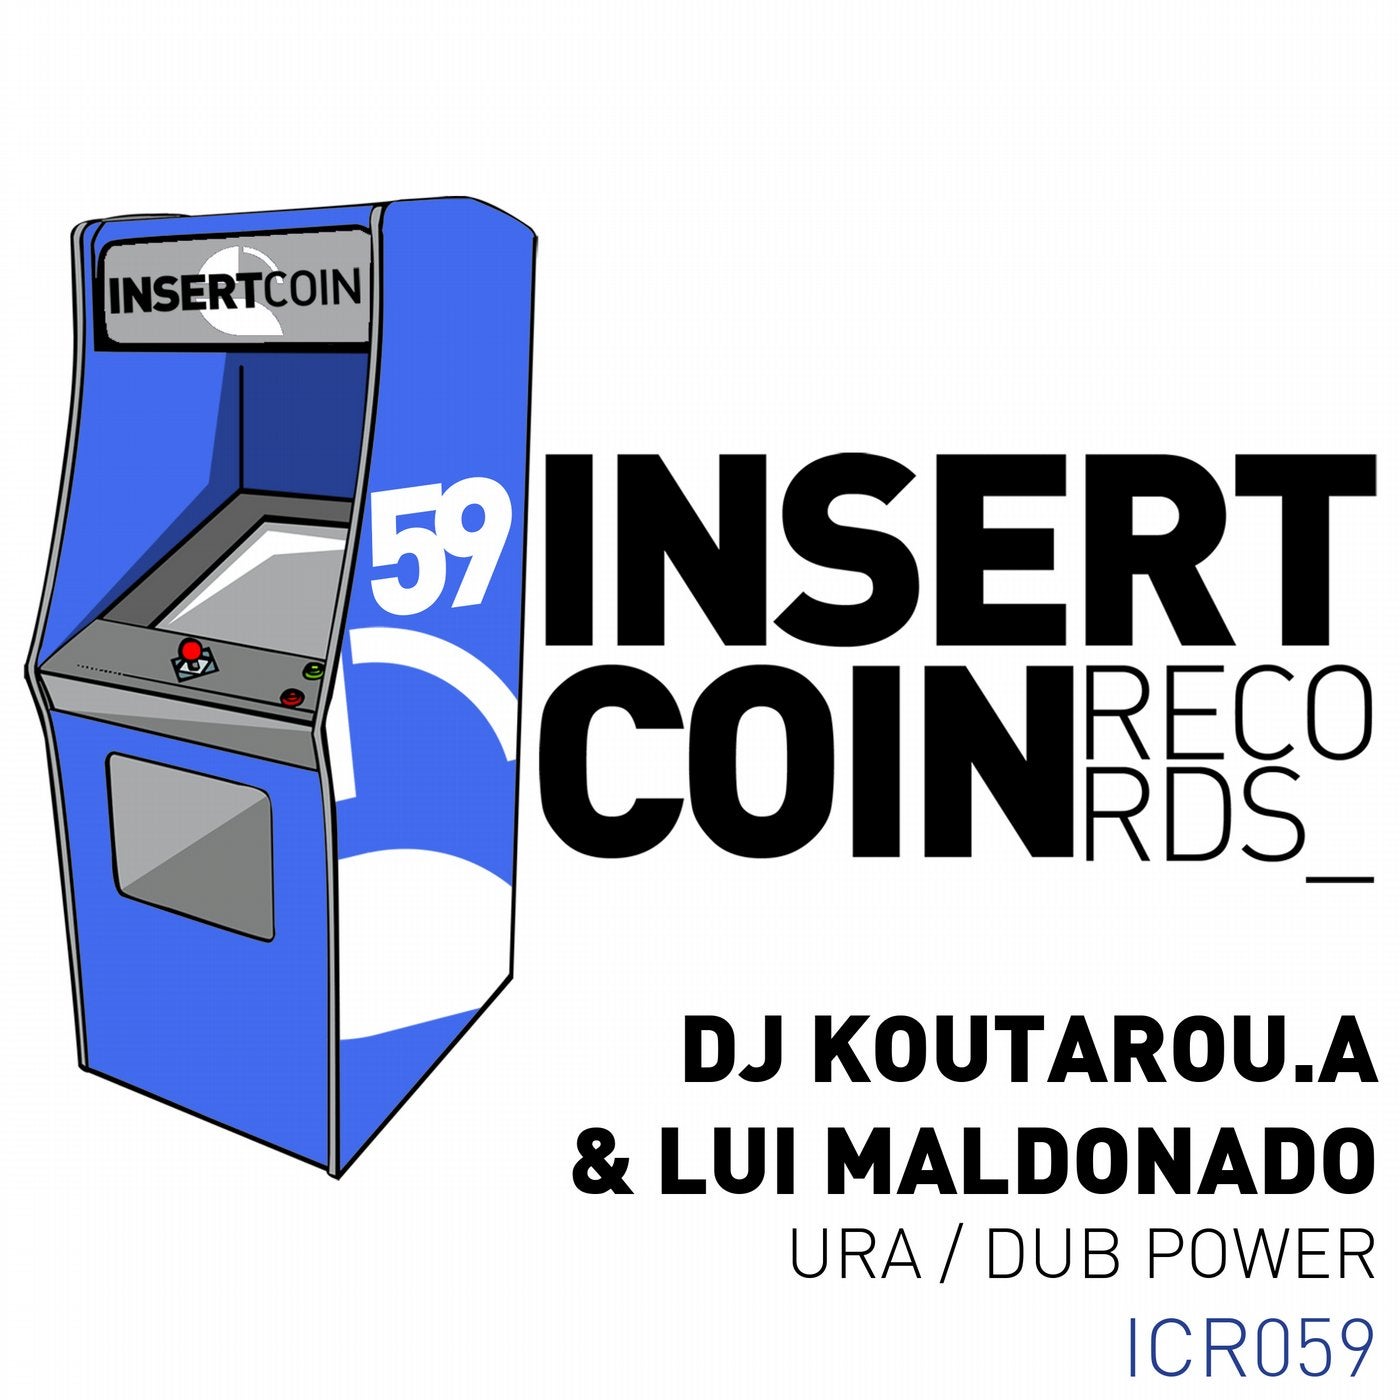 Ura / Dub Power